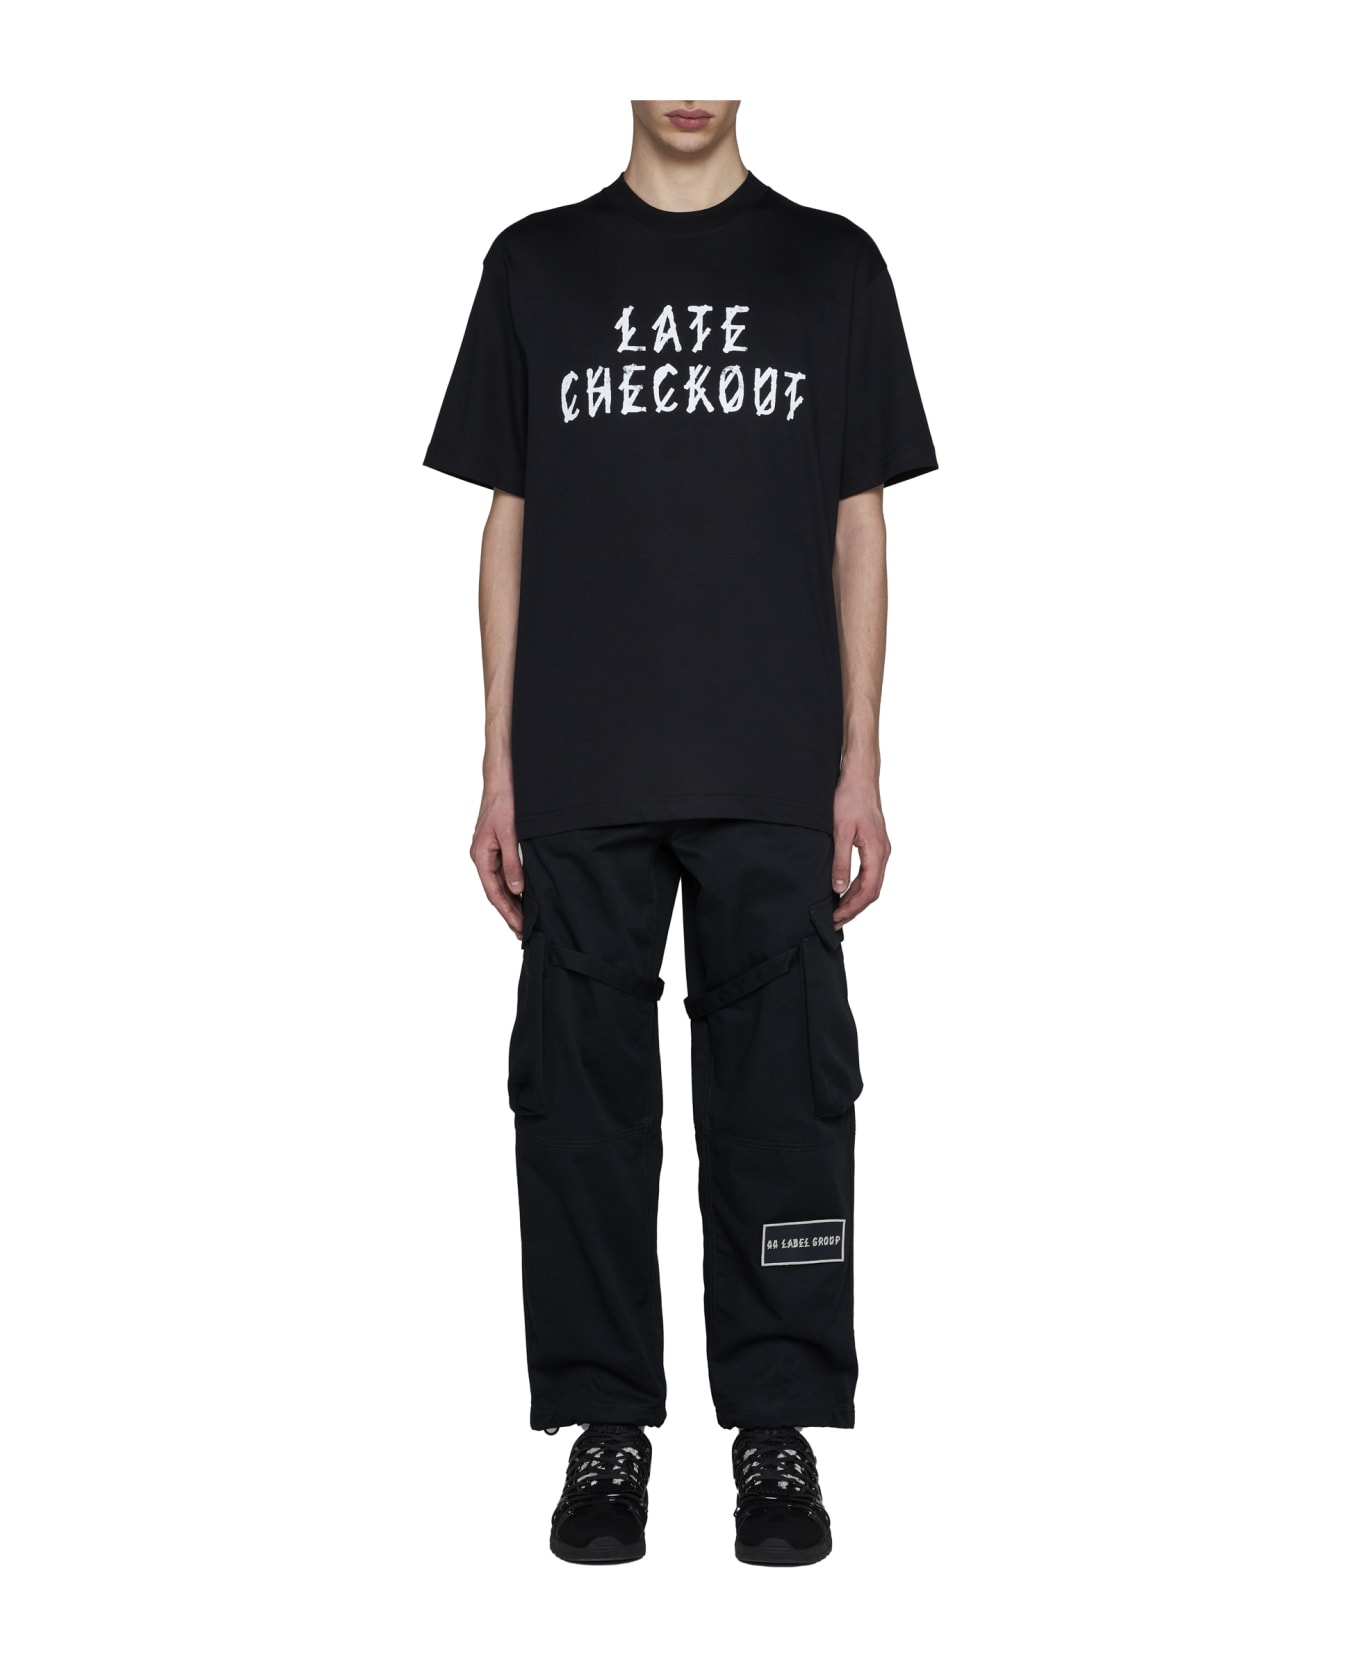 44 Label Group T-Shirt - Balck+late checkout